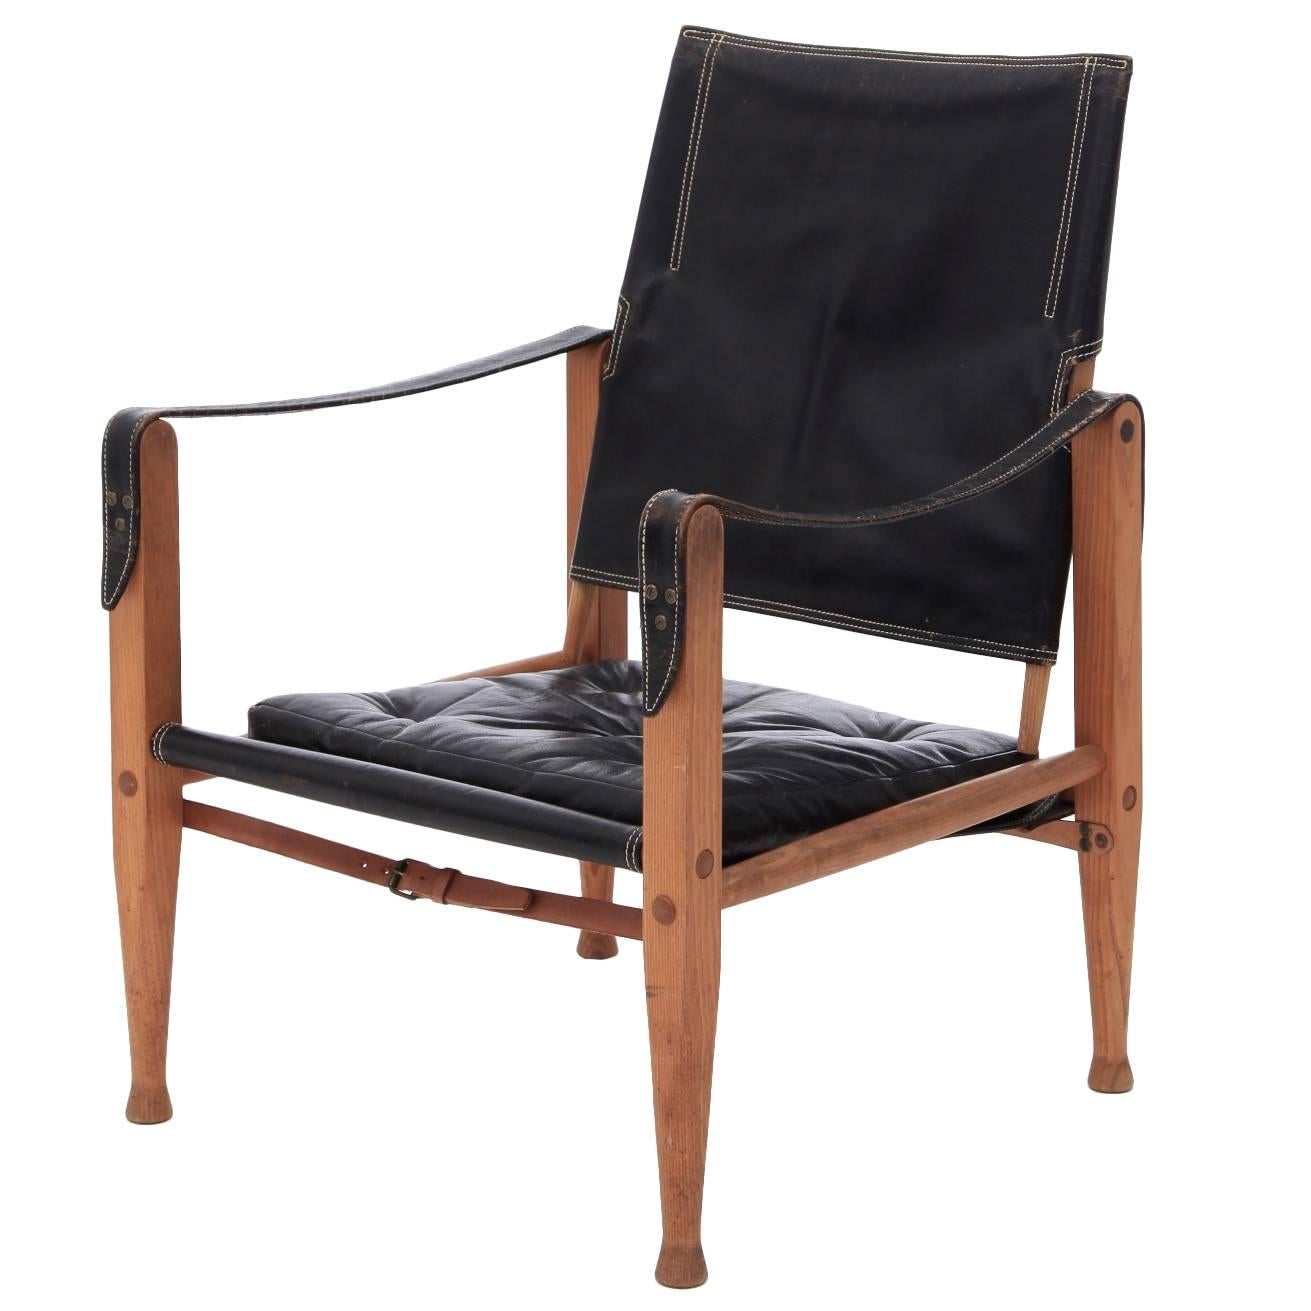 Kaare Klint Safari Campaign Chair, Designed in 1933 for Rud. Rasmussen